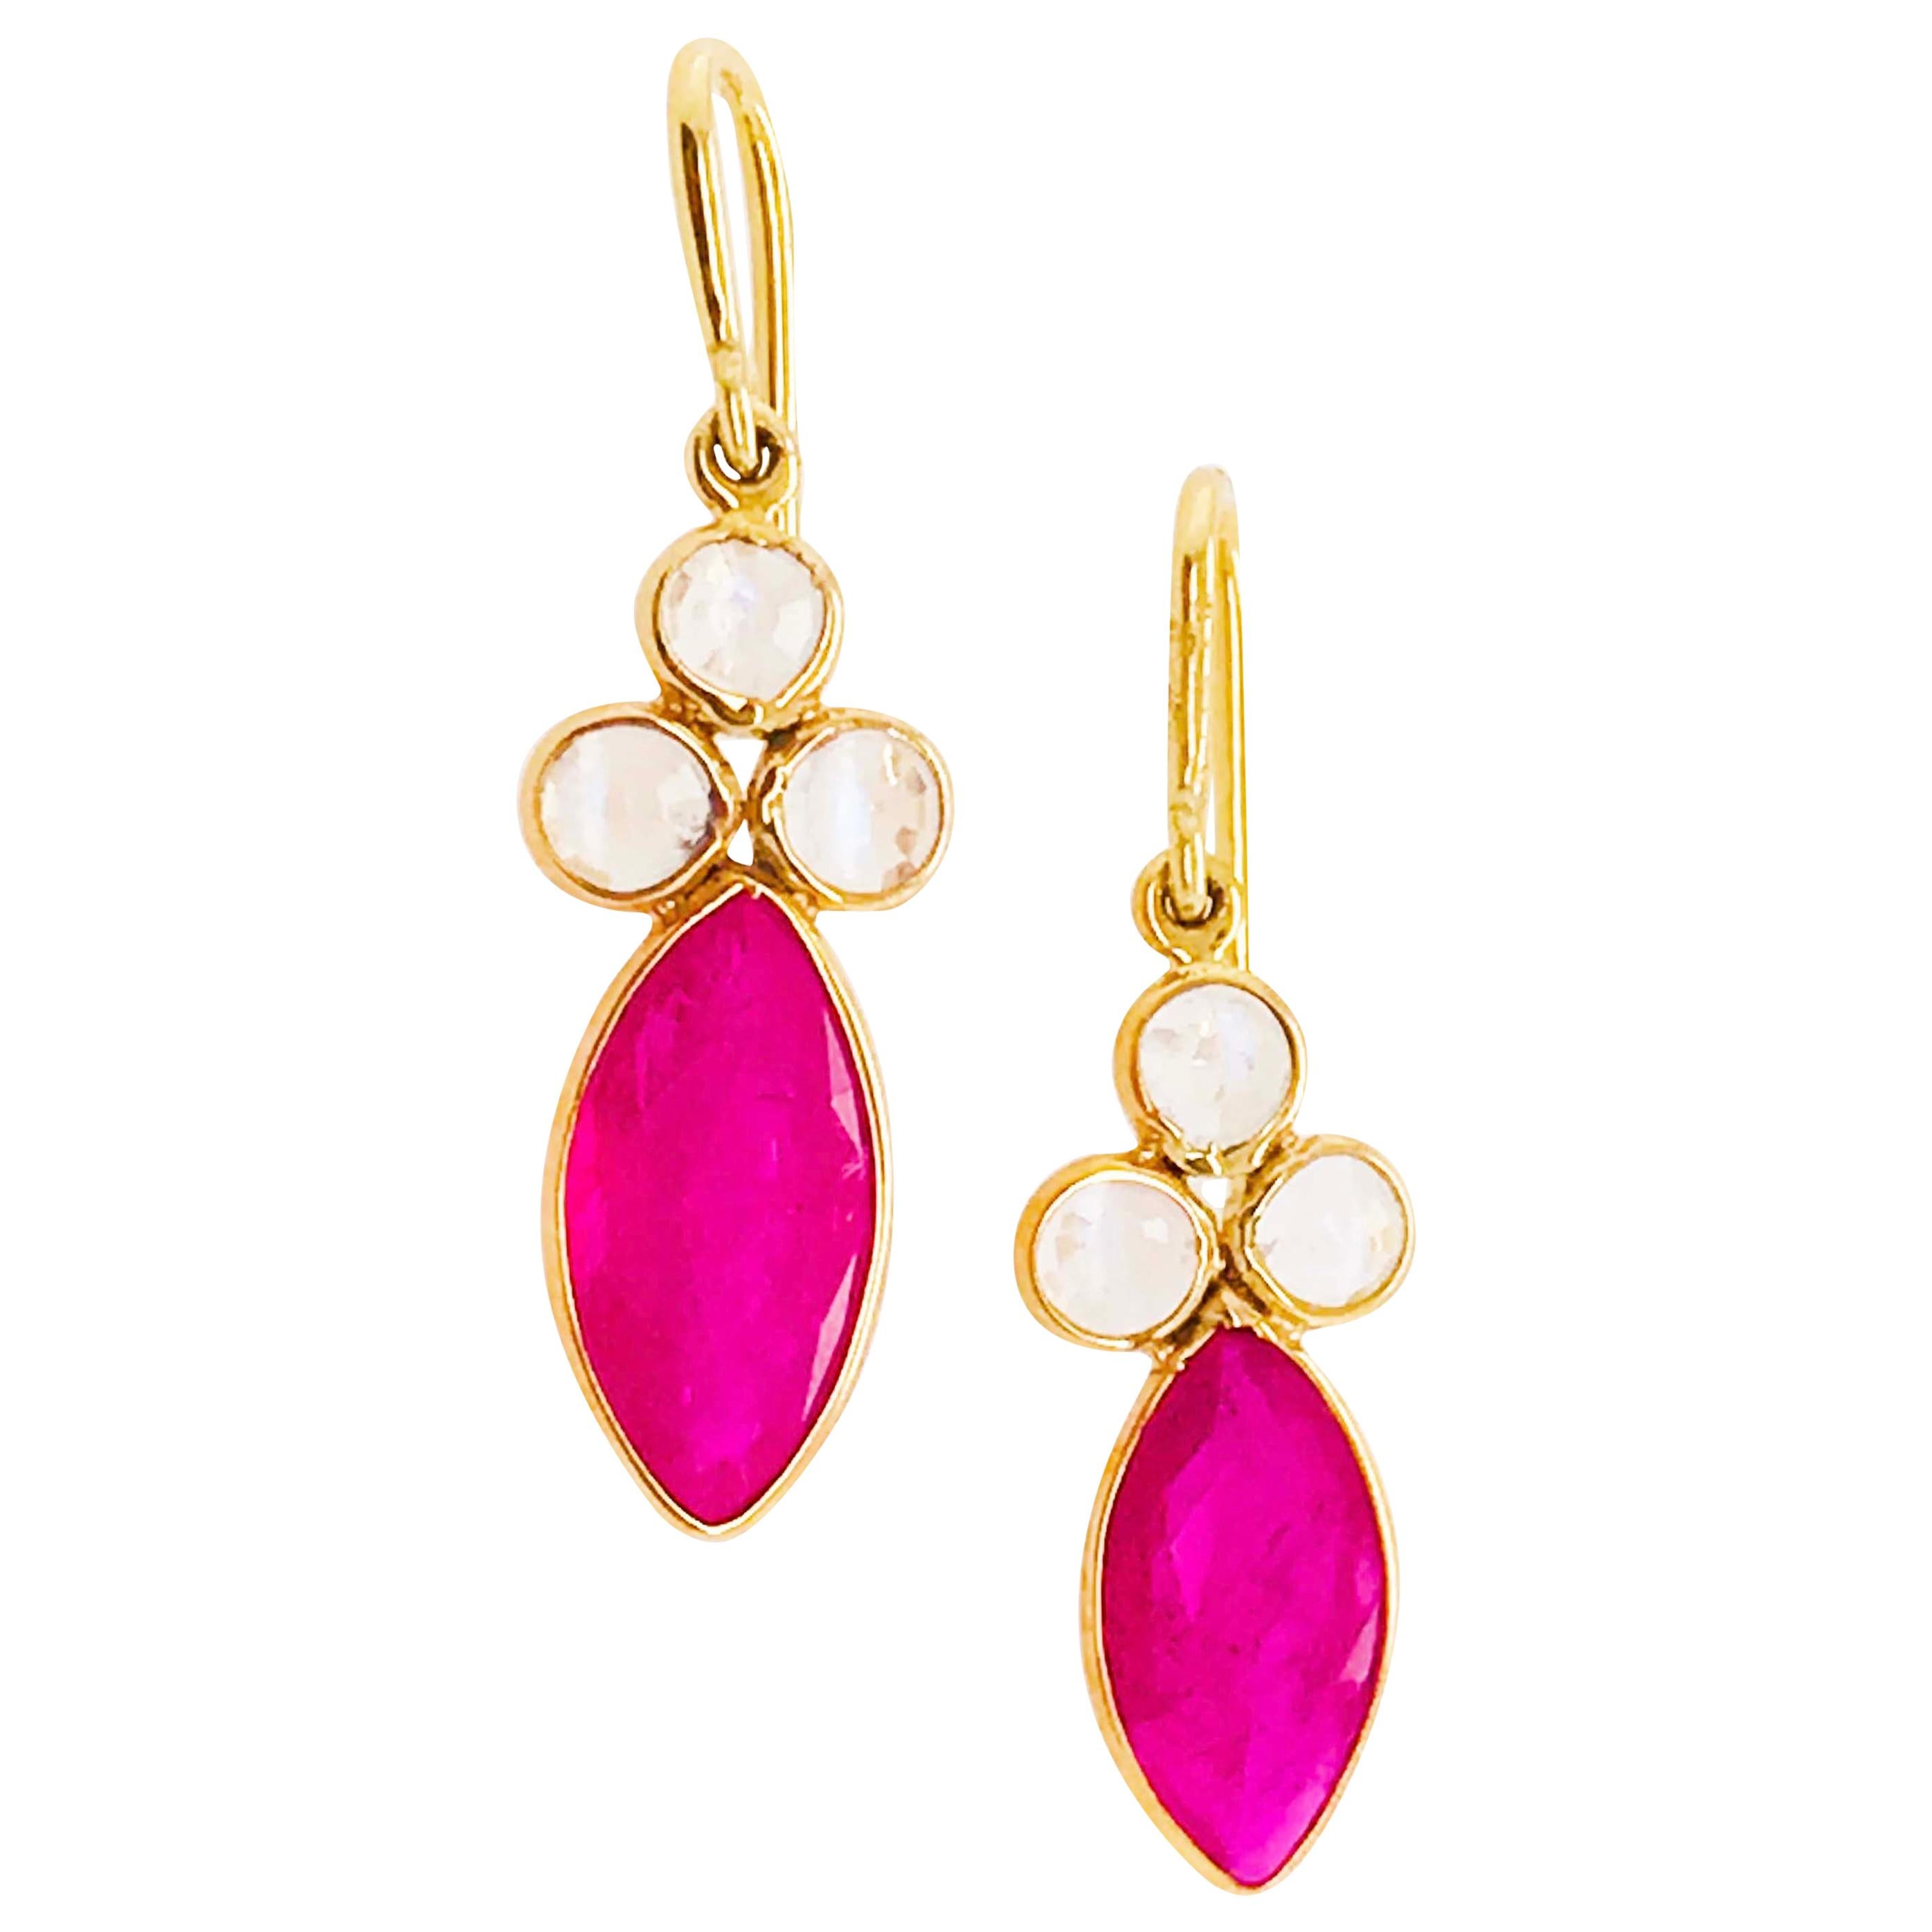 Ruby and Rainbow Moonstone Earrings, 18 Karat Yellow Gold Earring Dangles